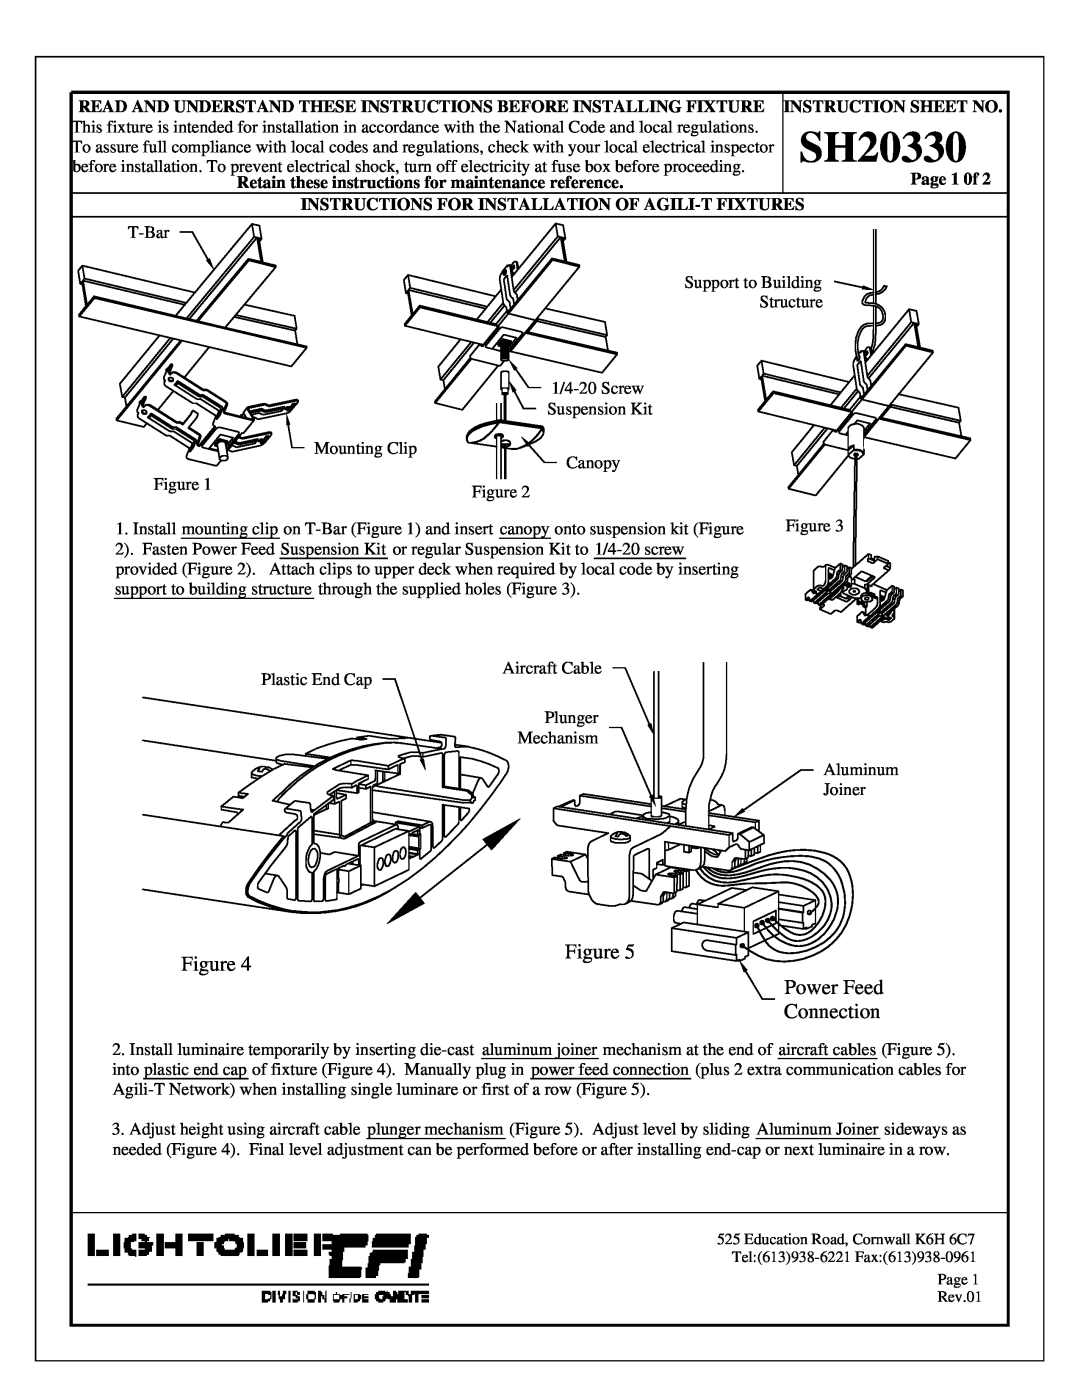 Lightolier SH20330 instruction sheet Figure Power Feed Connection, Instruction Sheet No, Page 1 0f 